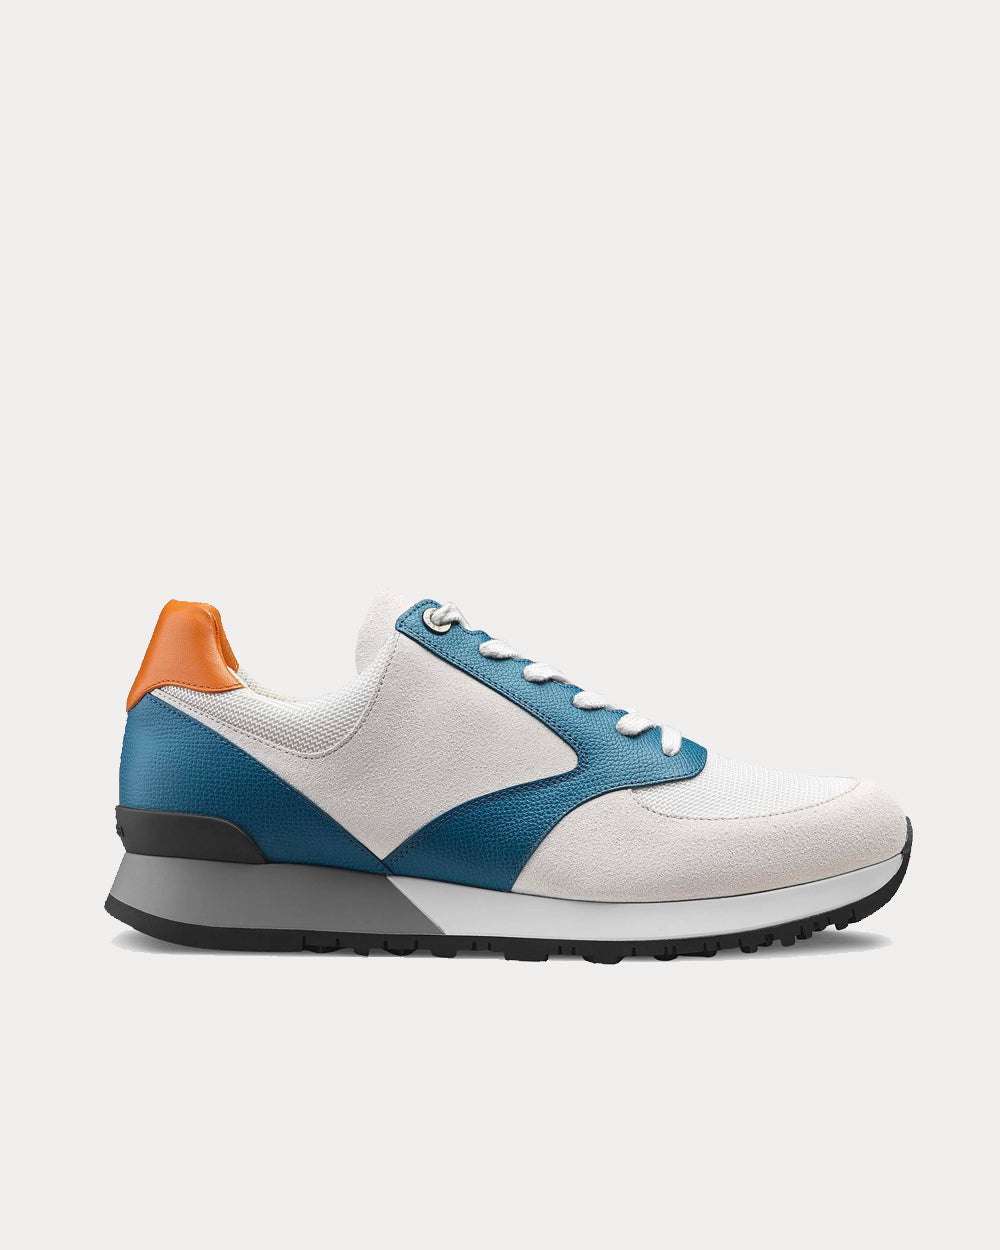 John Lobb - Foundry Blue / White / Orange Cross Grain Low Top Sneakers